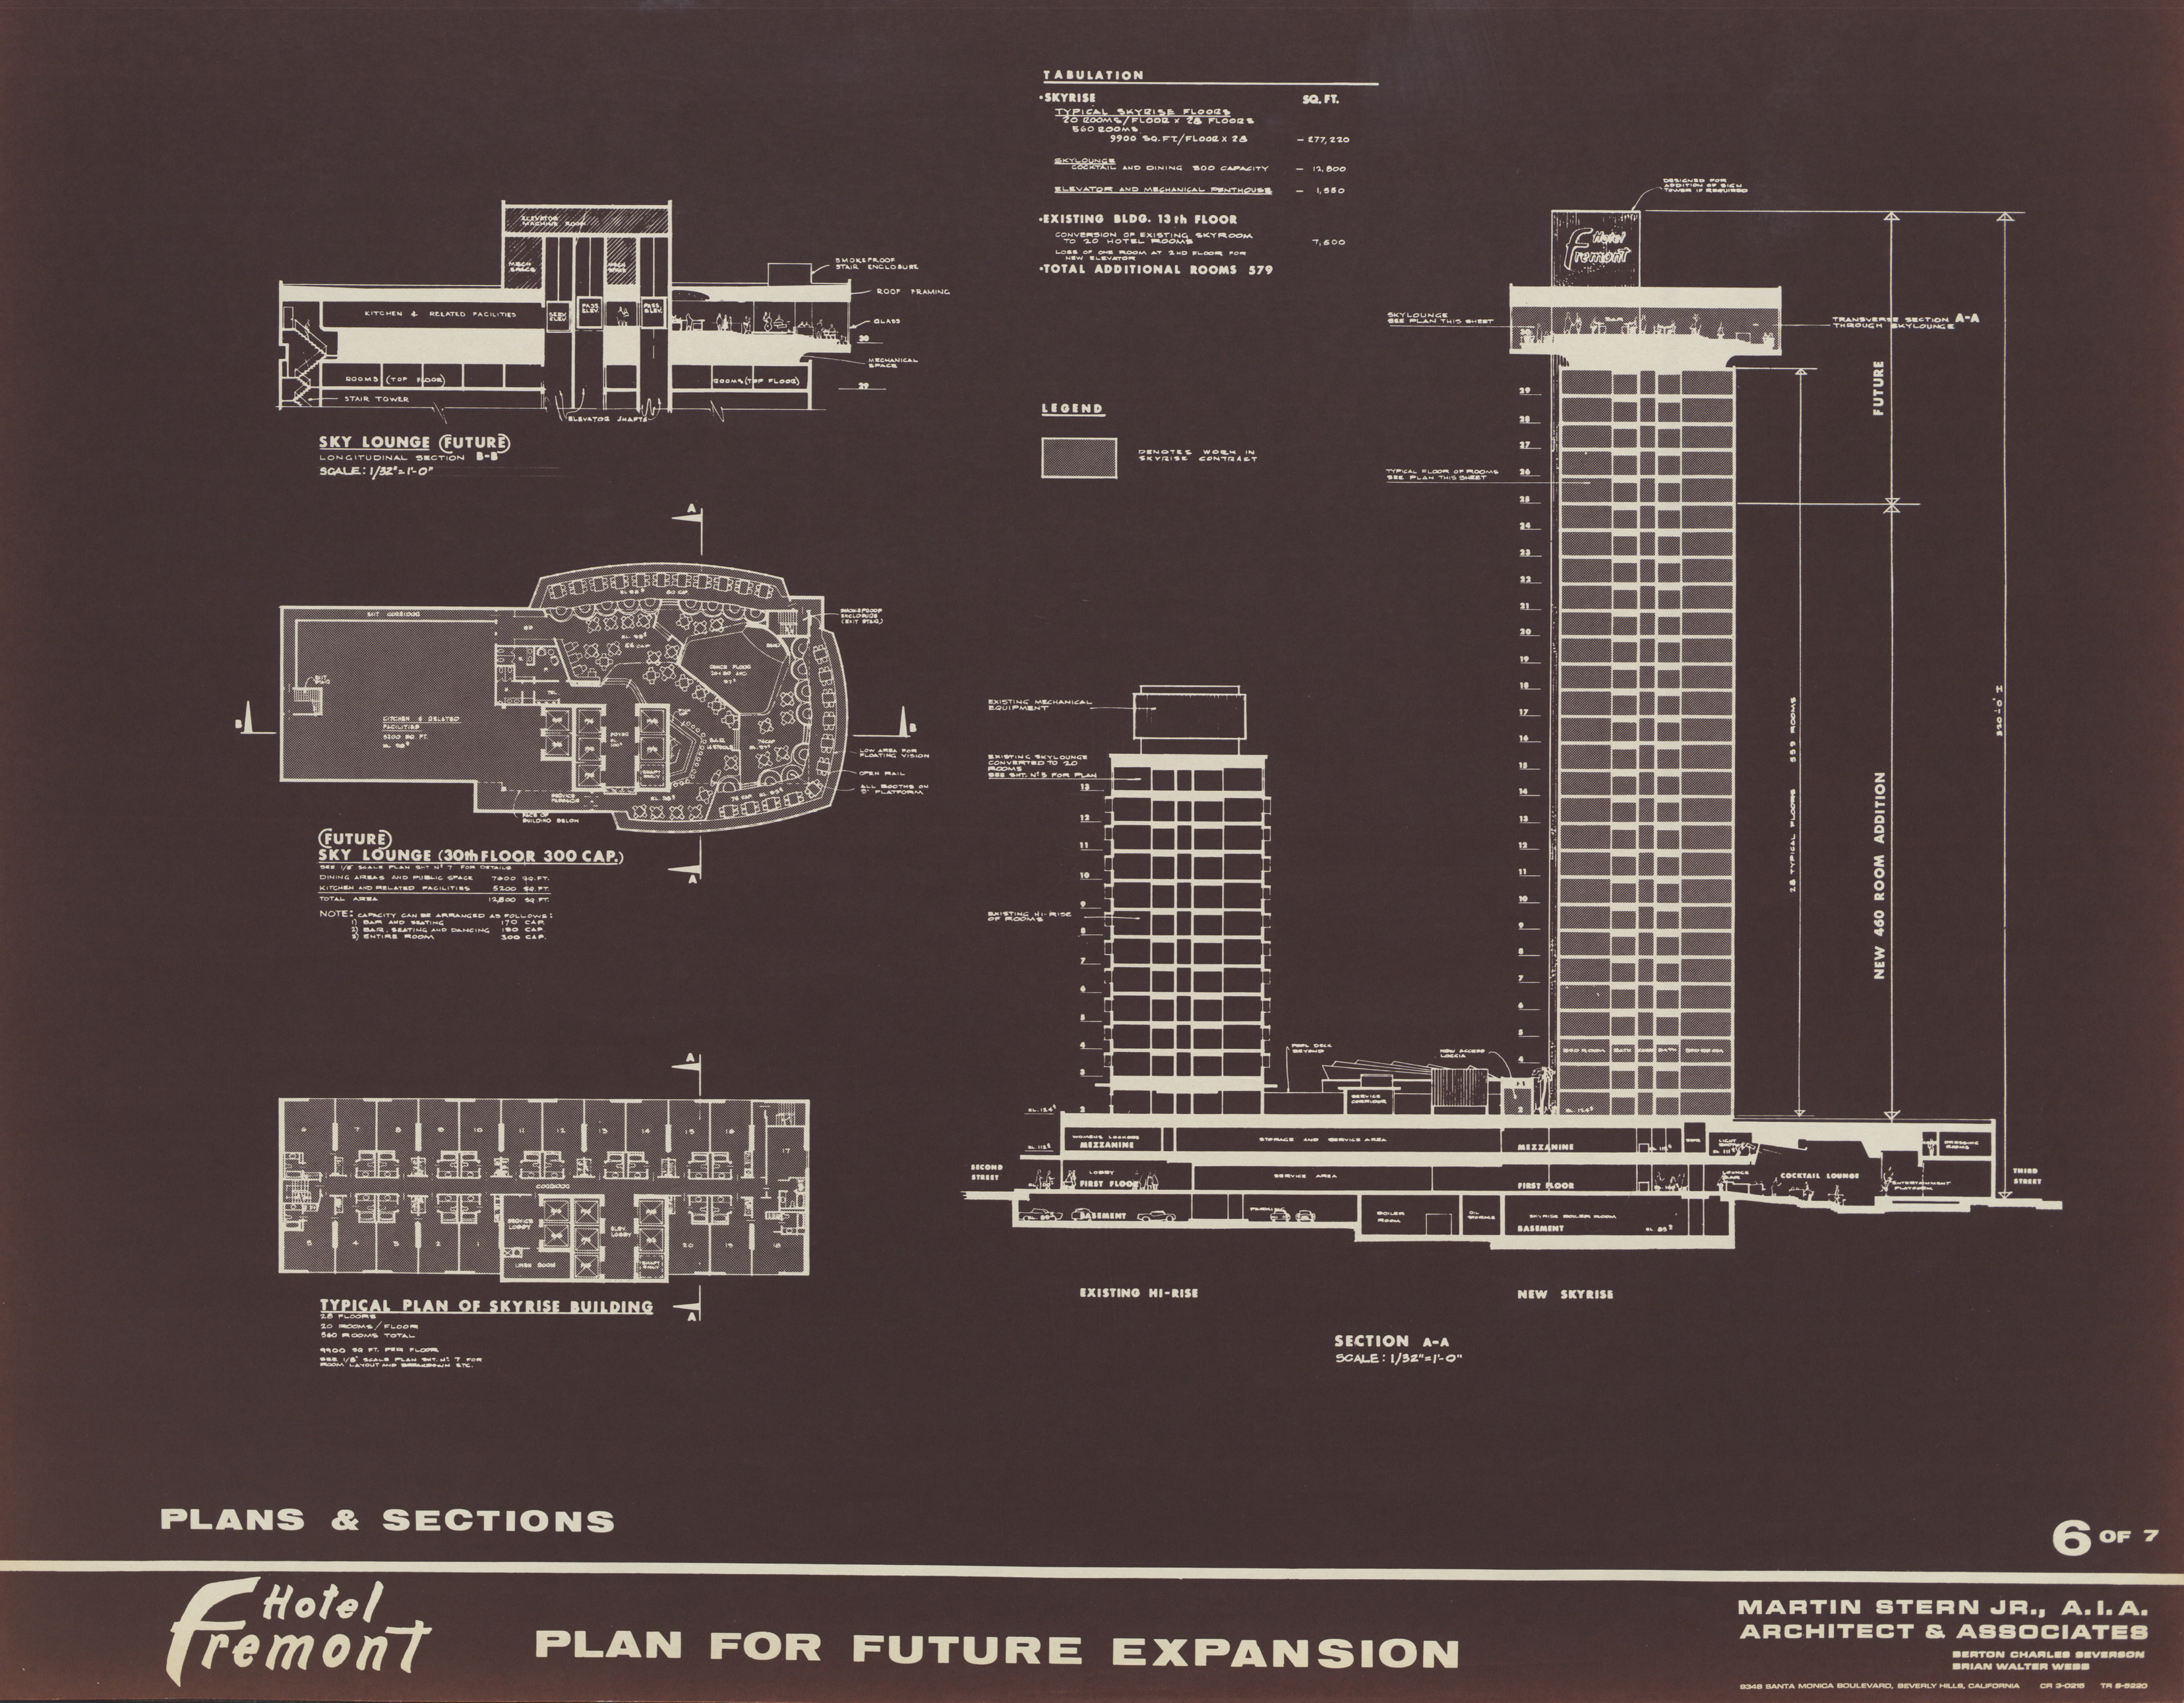 Hotel Fremont Plan for Future Expansion, image 7